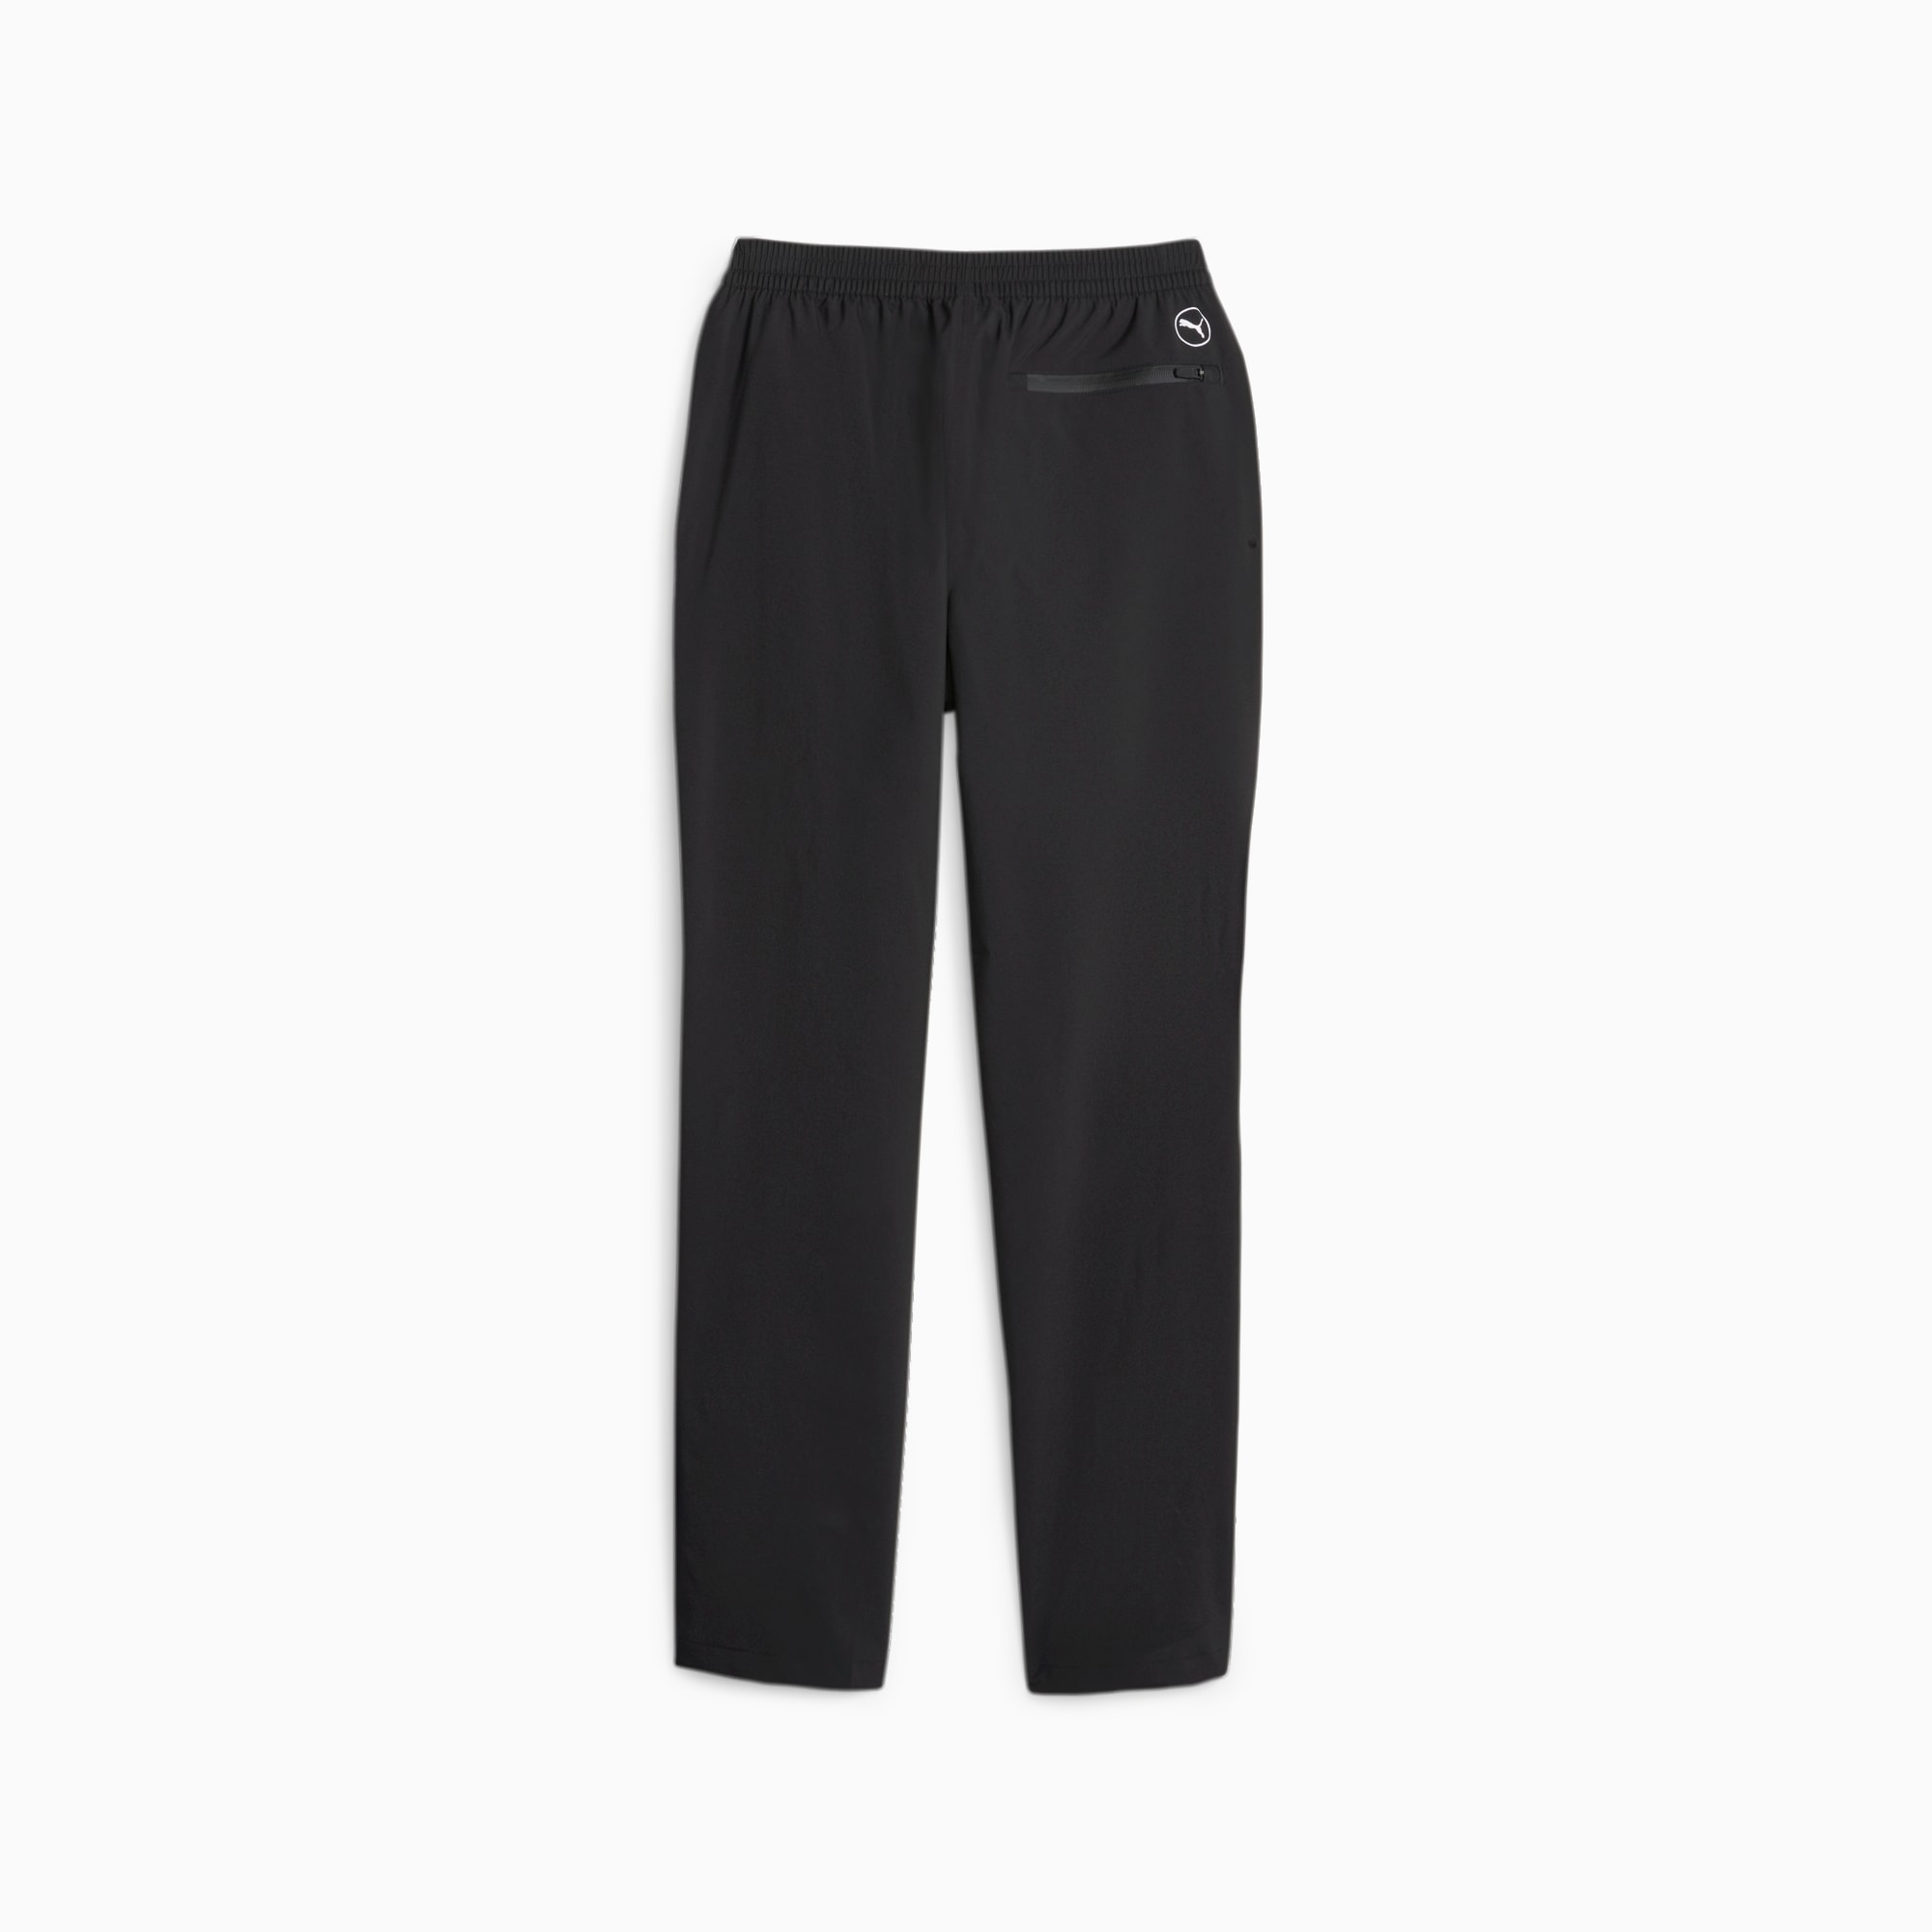 PUMA Drylbl Men's Rain Pants, Black, Size S/S, Clothing